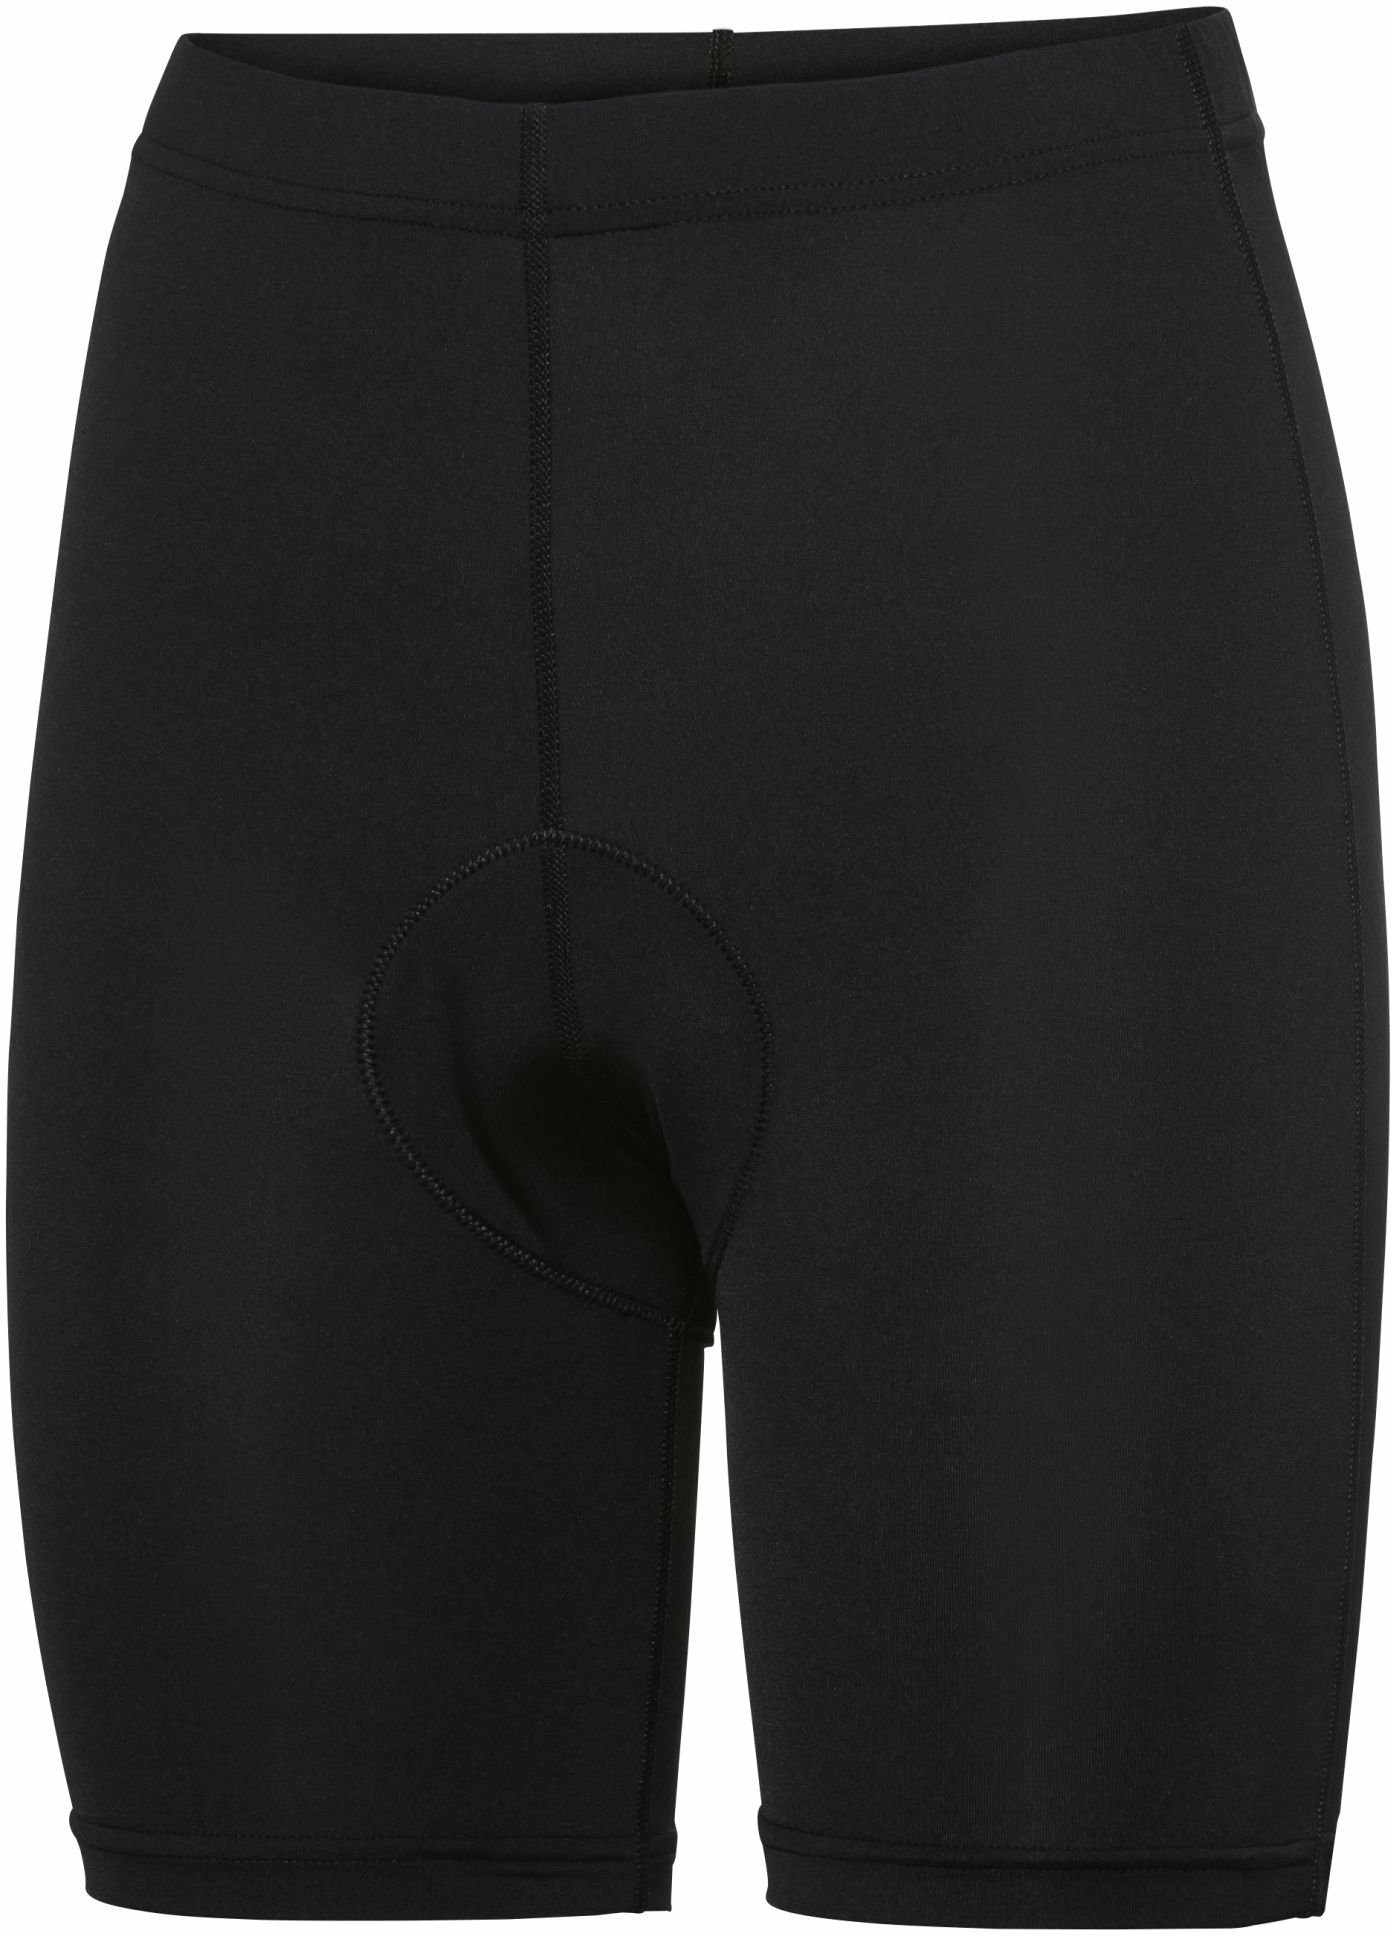 Bekleidung/Unterwäsche: Apura  Damen Unterhose Baselayer Shorts Pura XL 